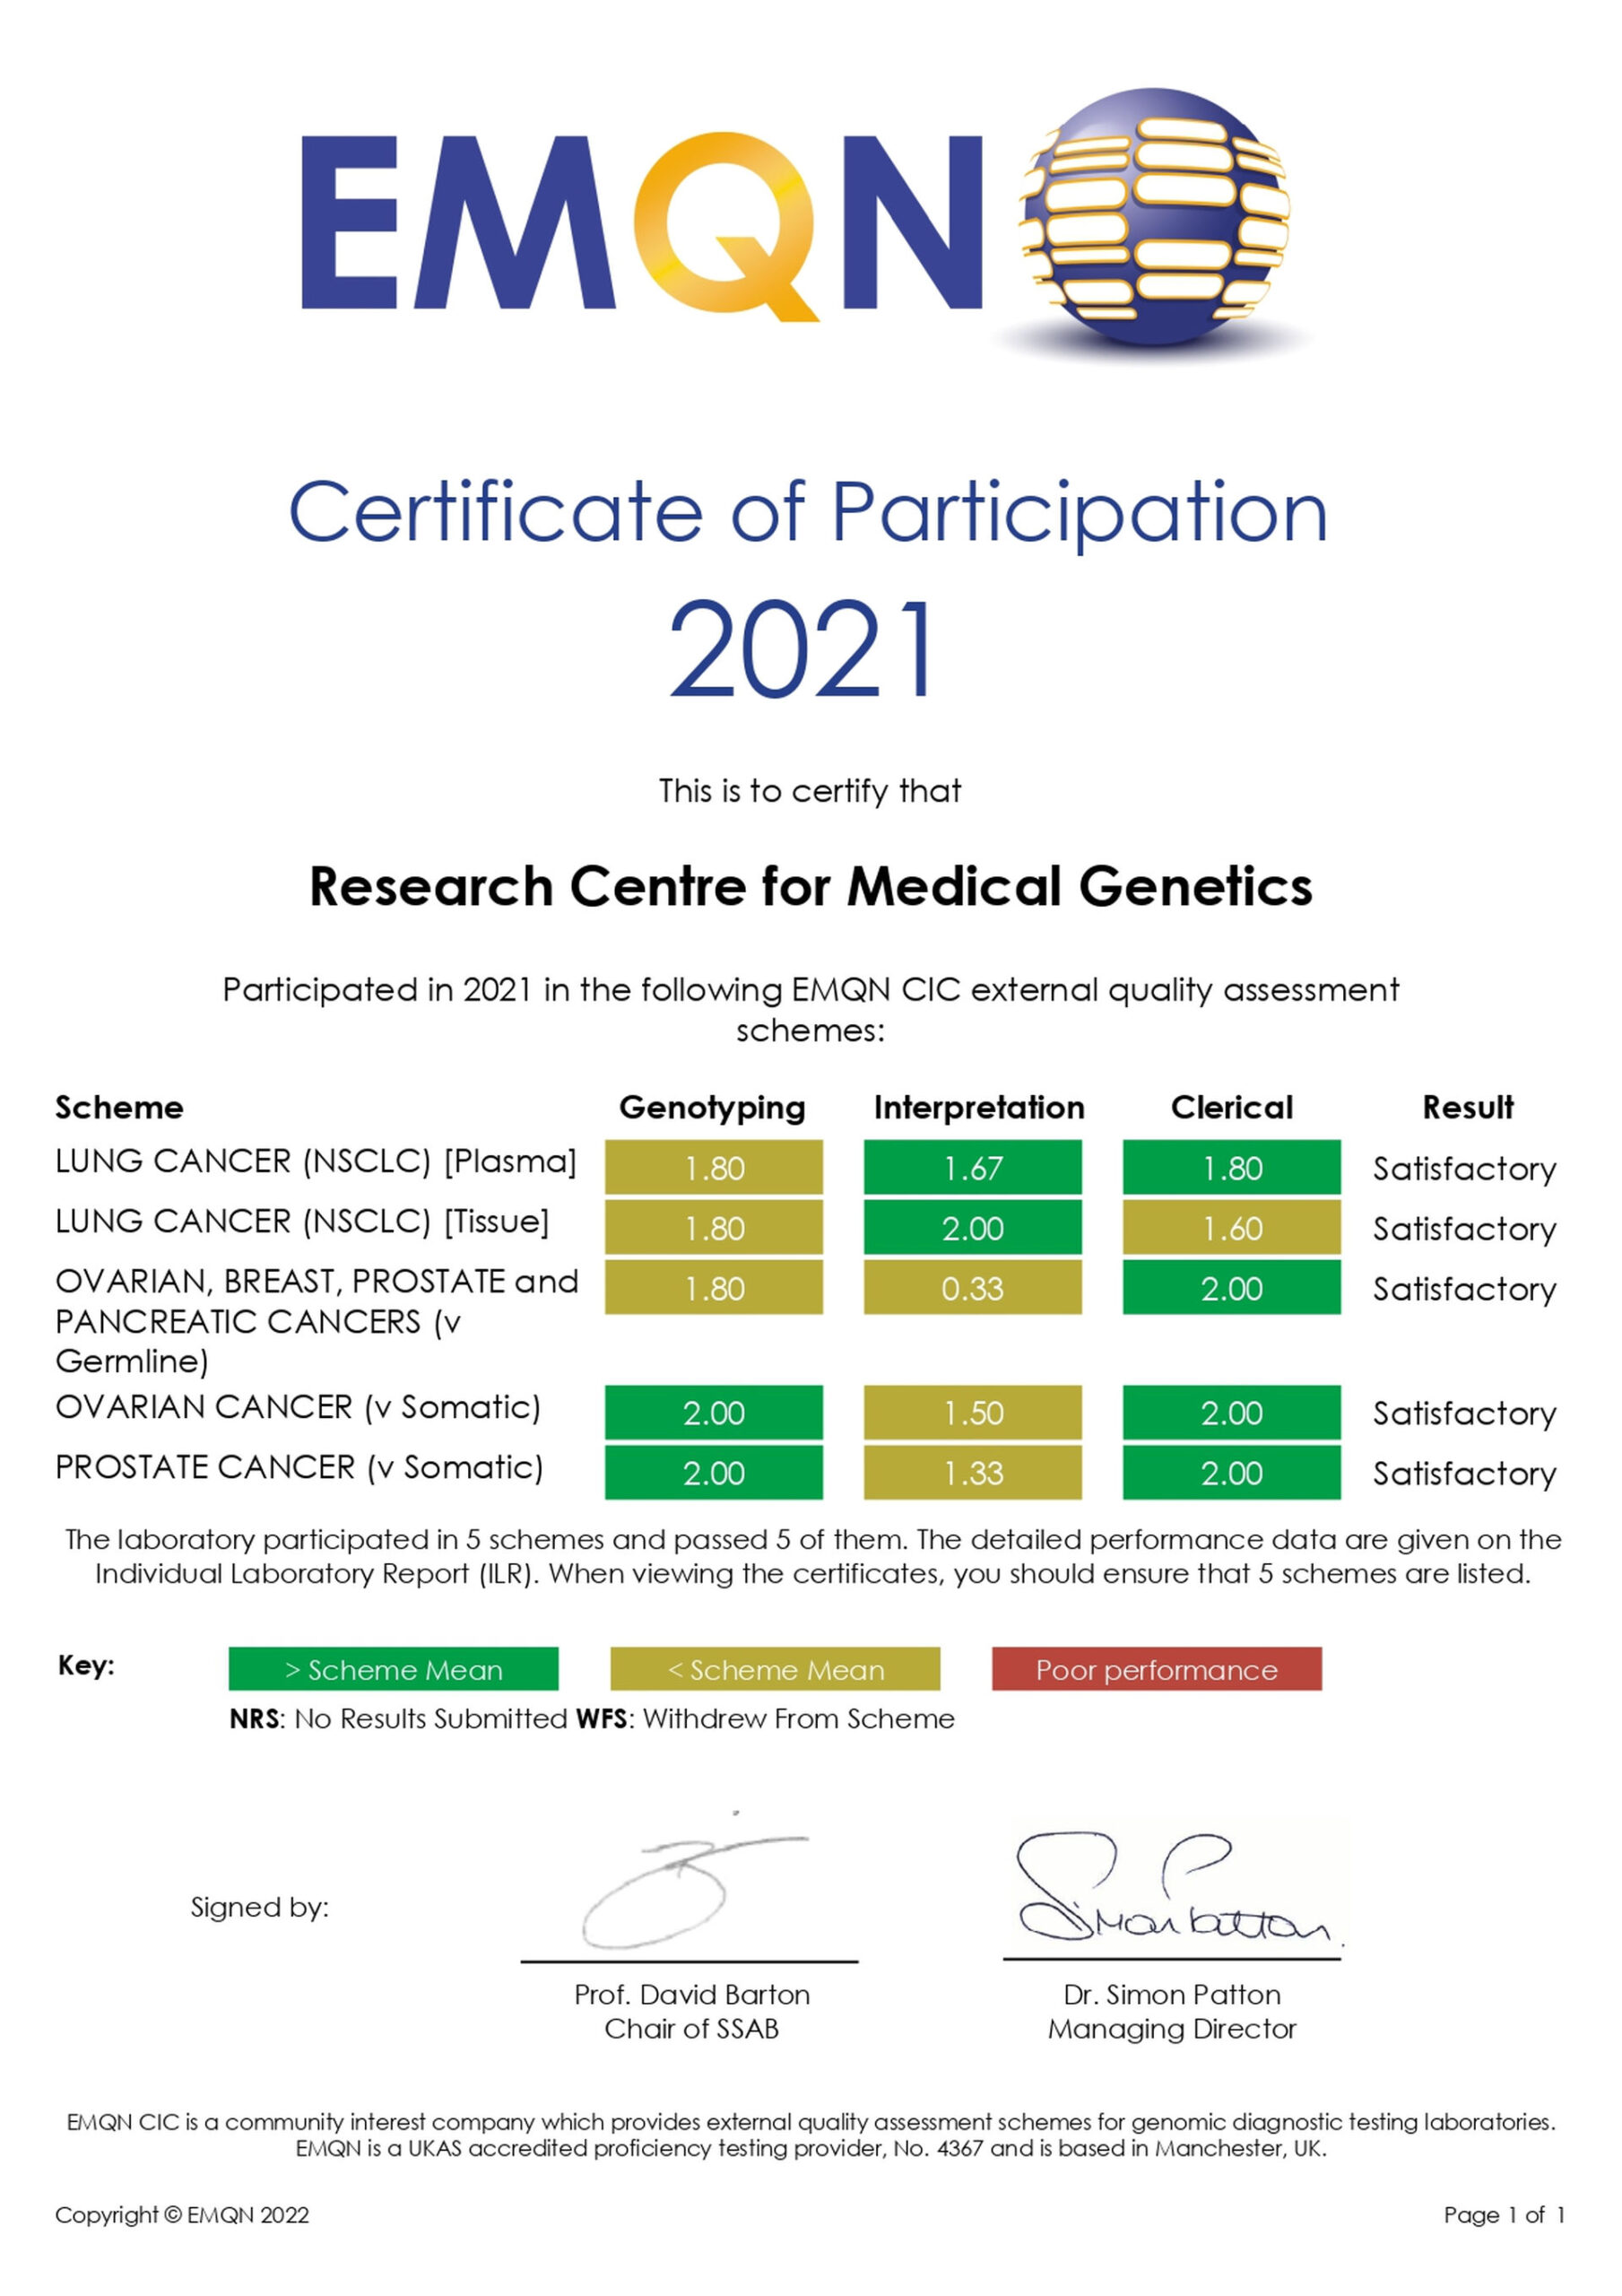 EMQN Certificate of Participation 2021